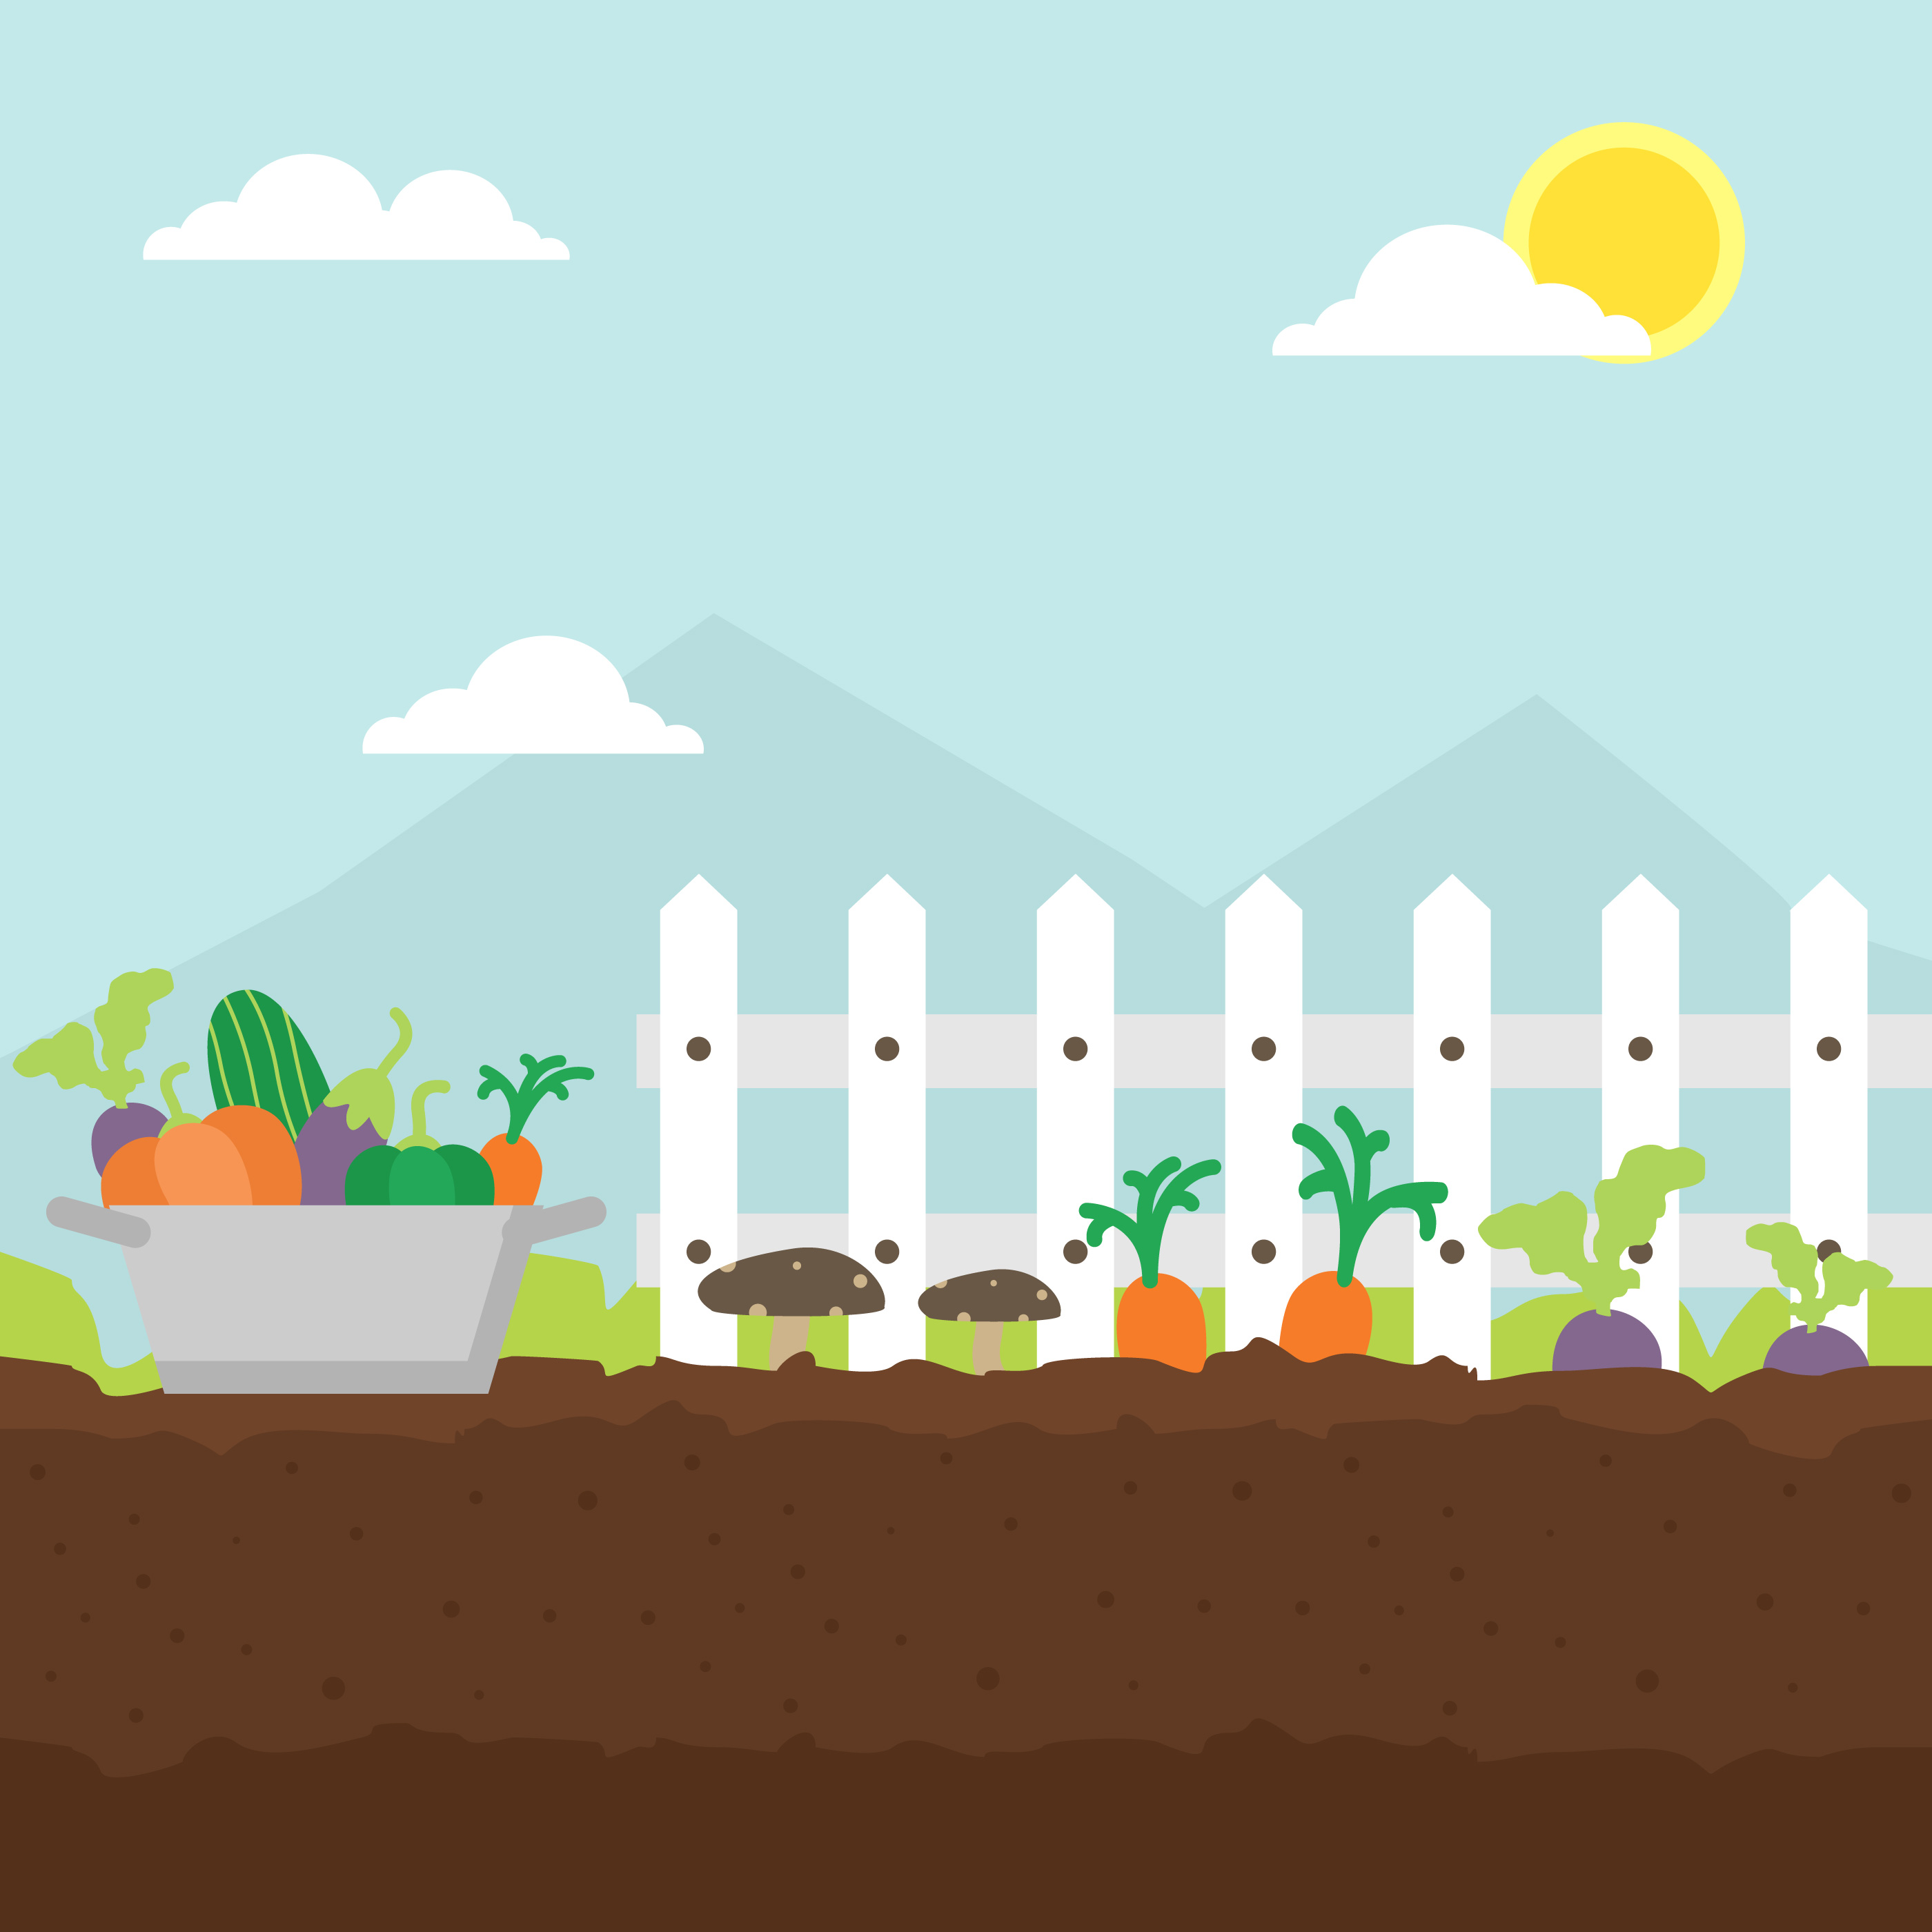 Vegetable Garden Illustration 202048 - Download Free Vectors, Clipart ...